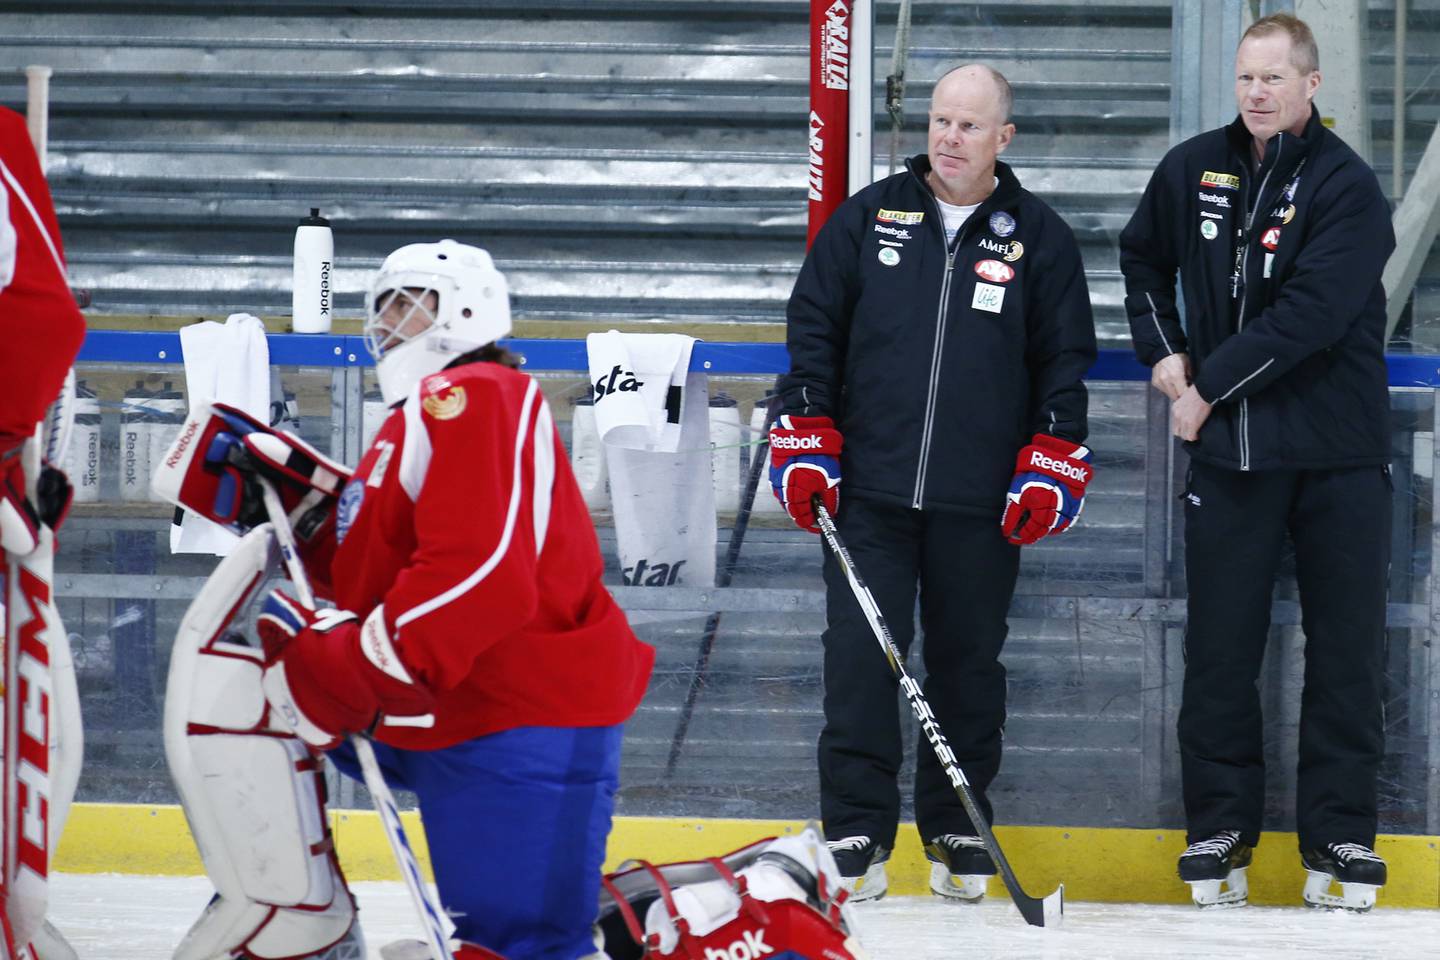 Knut Jørgen Stubdal (i midten) har lang fartstid som ishockeytrener, blant annet fra det norske landslaget sammen med Roy Johansen (til høyre). Der ga han seg for fem år siden. Jobben i MS er den første siden den gang.